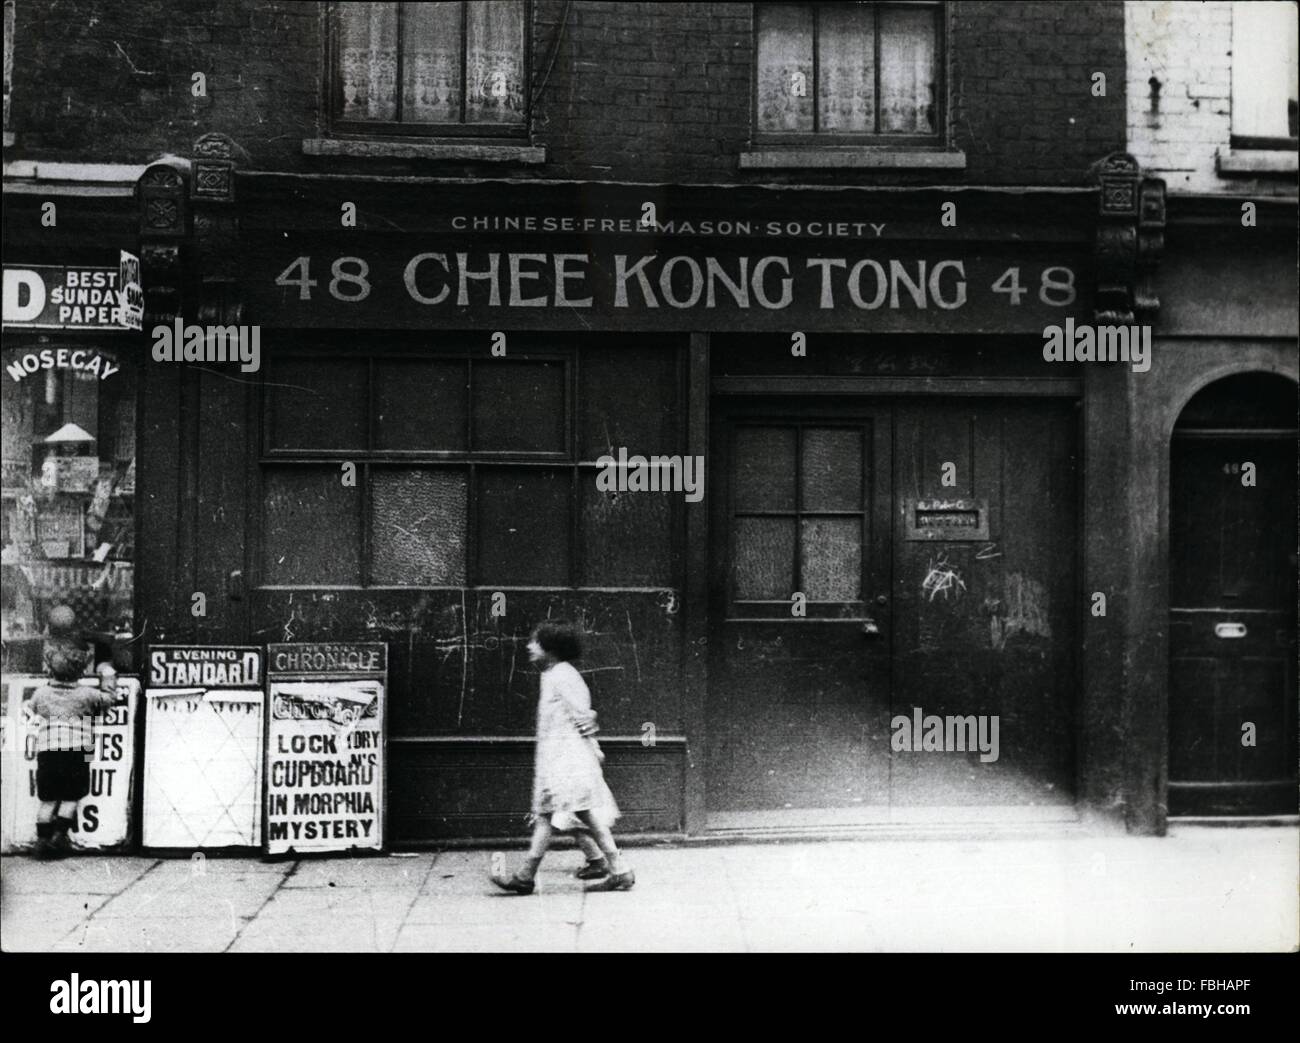 1925 - London in the Twenties; Chinese Freemason Society in Limehouse. ©  Keystone Pictures USA/ZUMAPRESS.com/Alamy Live News Stock Photo - Alamy